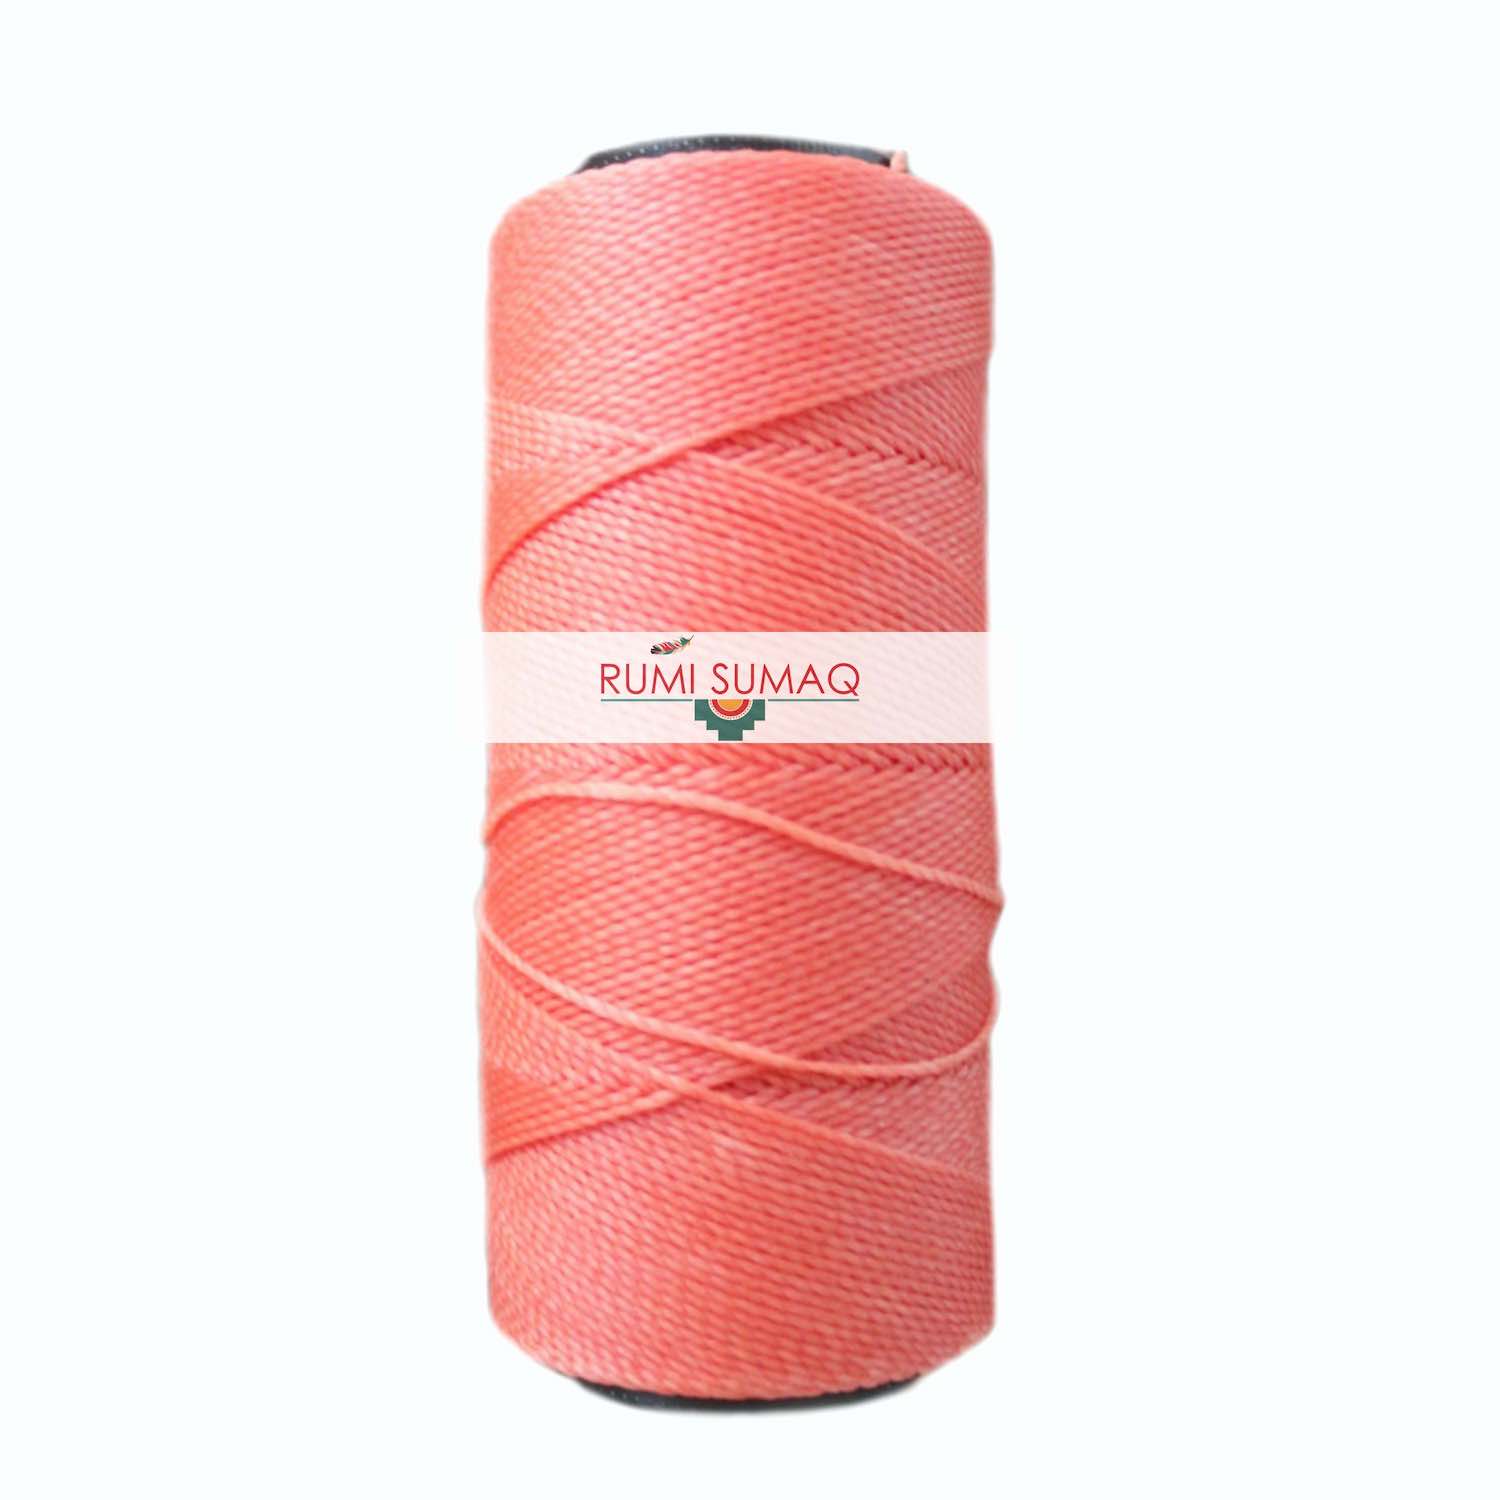 Settanyl 03-776 Salmon Waxed Polyester Cord 1mm Setta encerada | RUMI SUMAQ Brazilian Waxed Cords